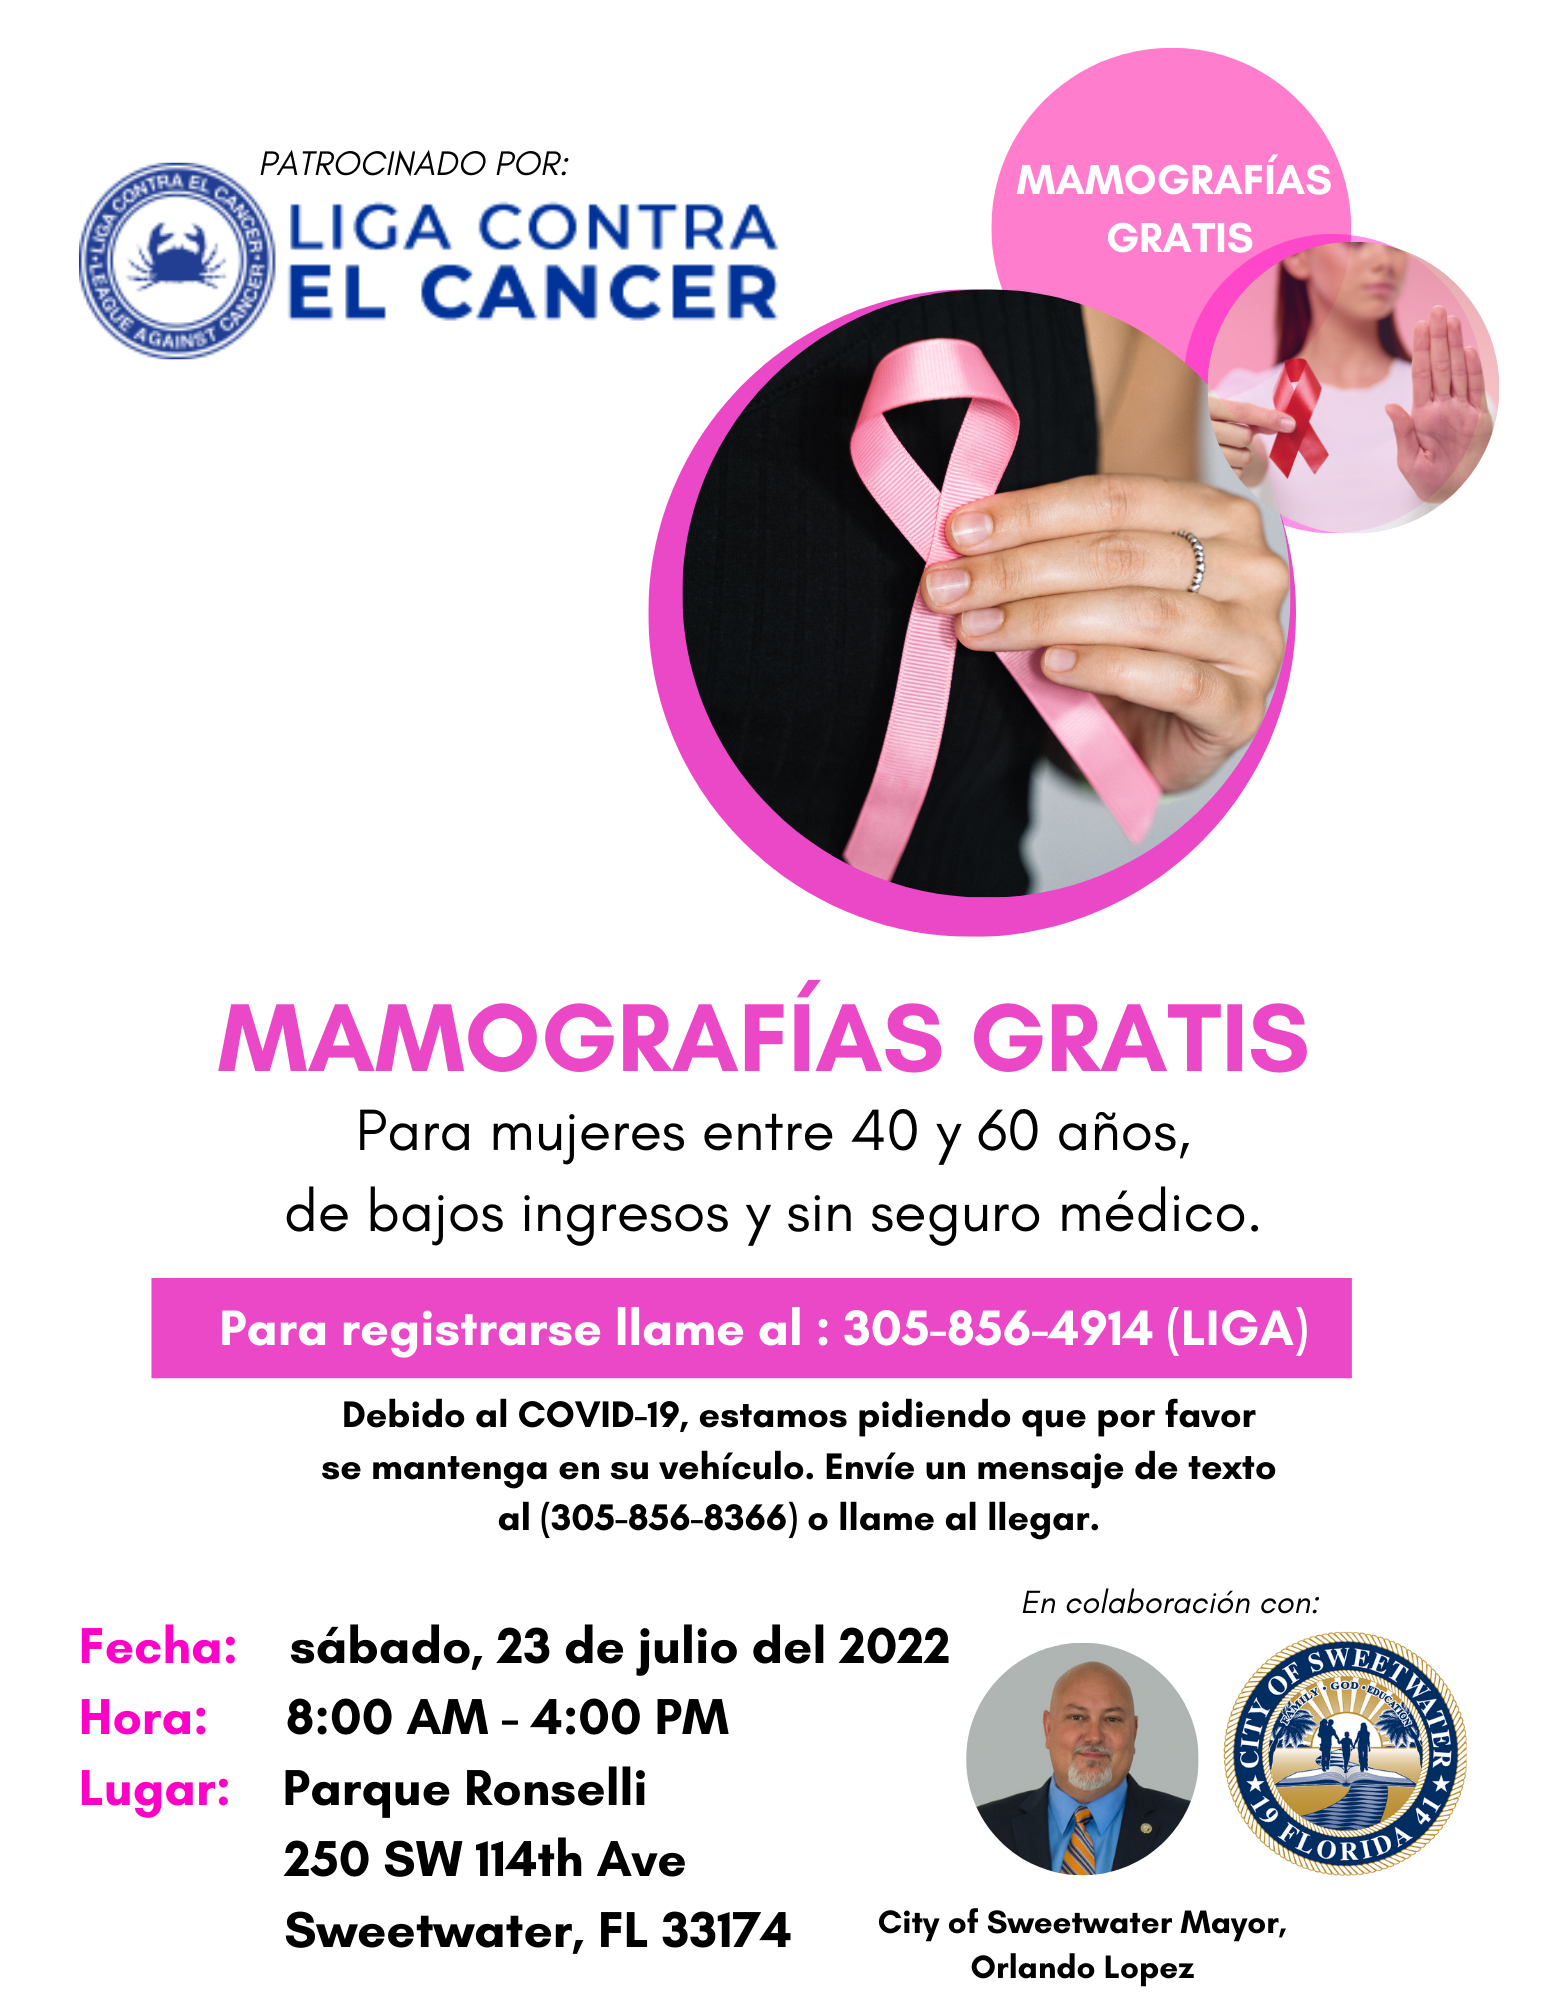 LA LIGA CONTRA EL CANCER FREE MAMMOGRAM SERVICES - City of Sweetwater